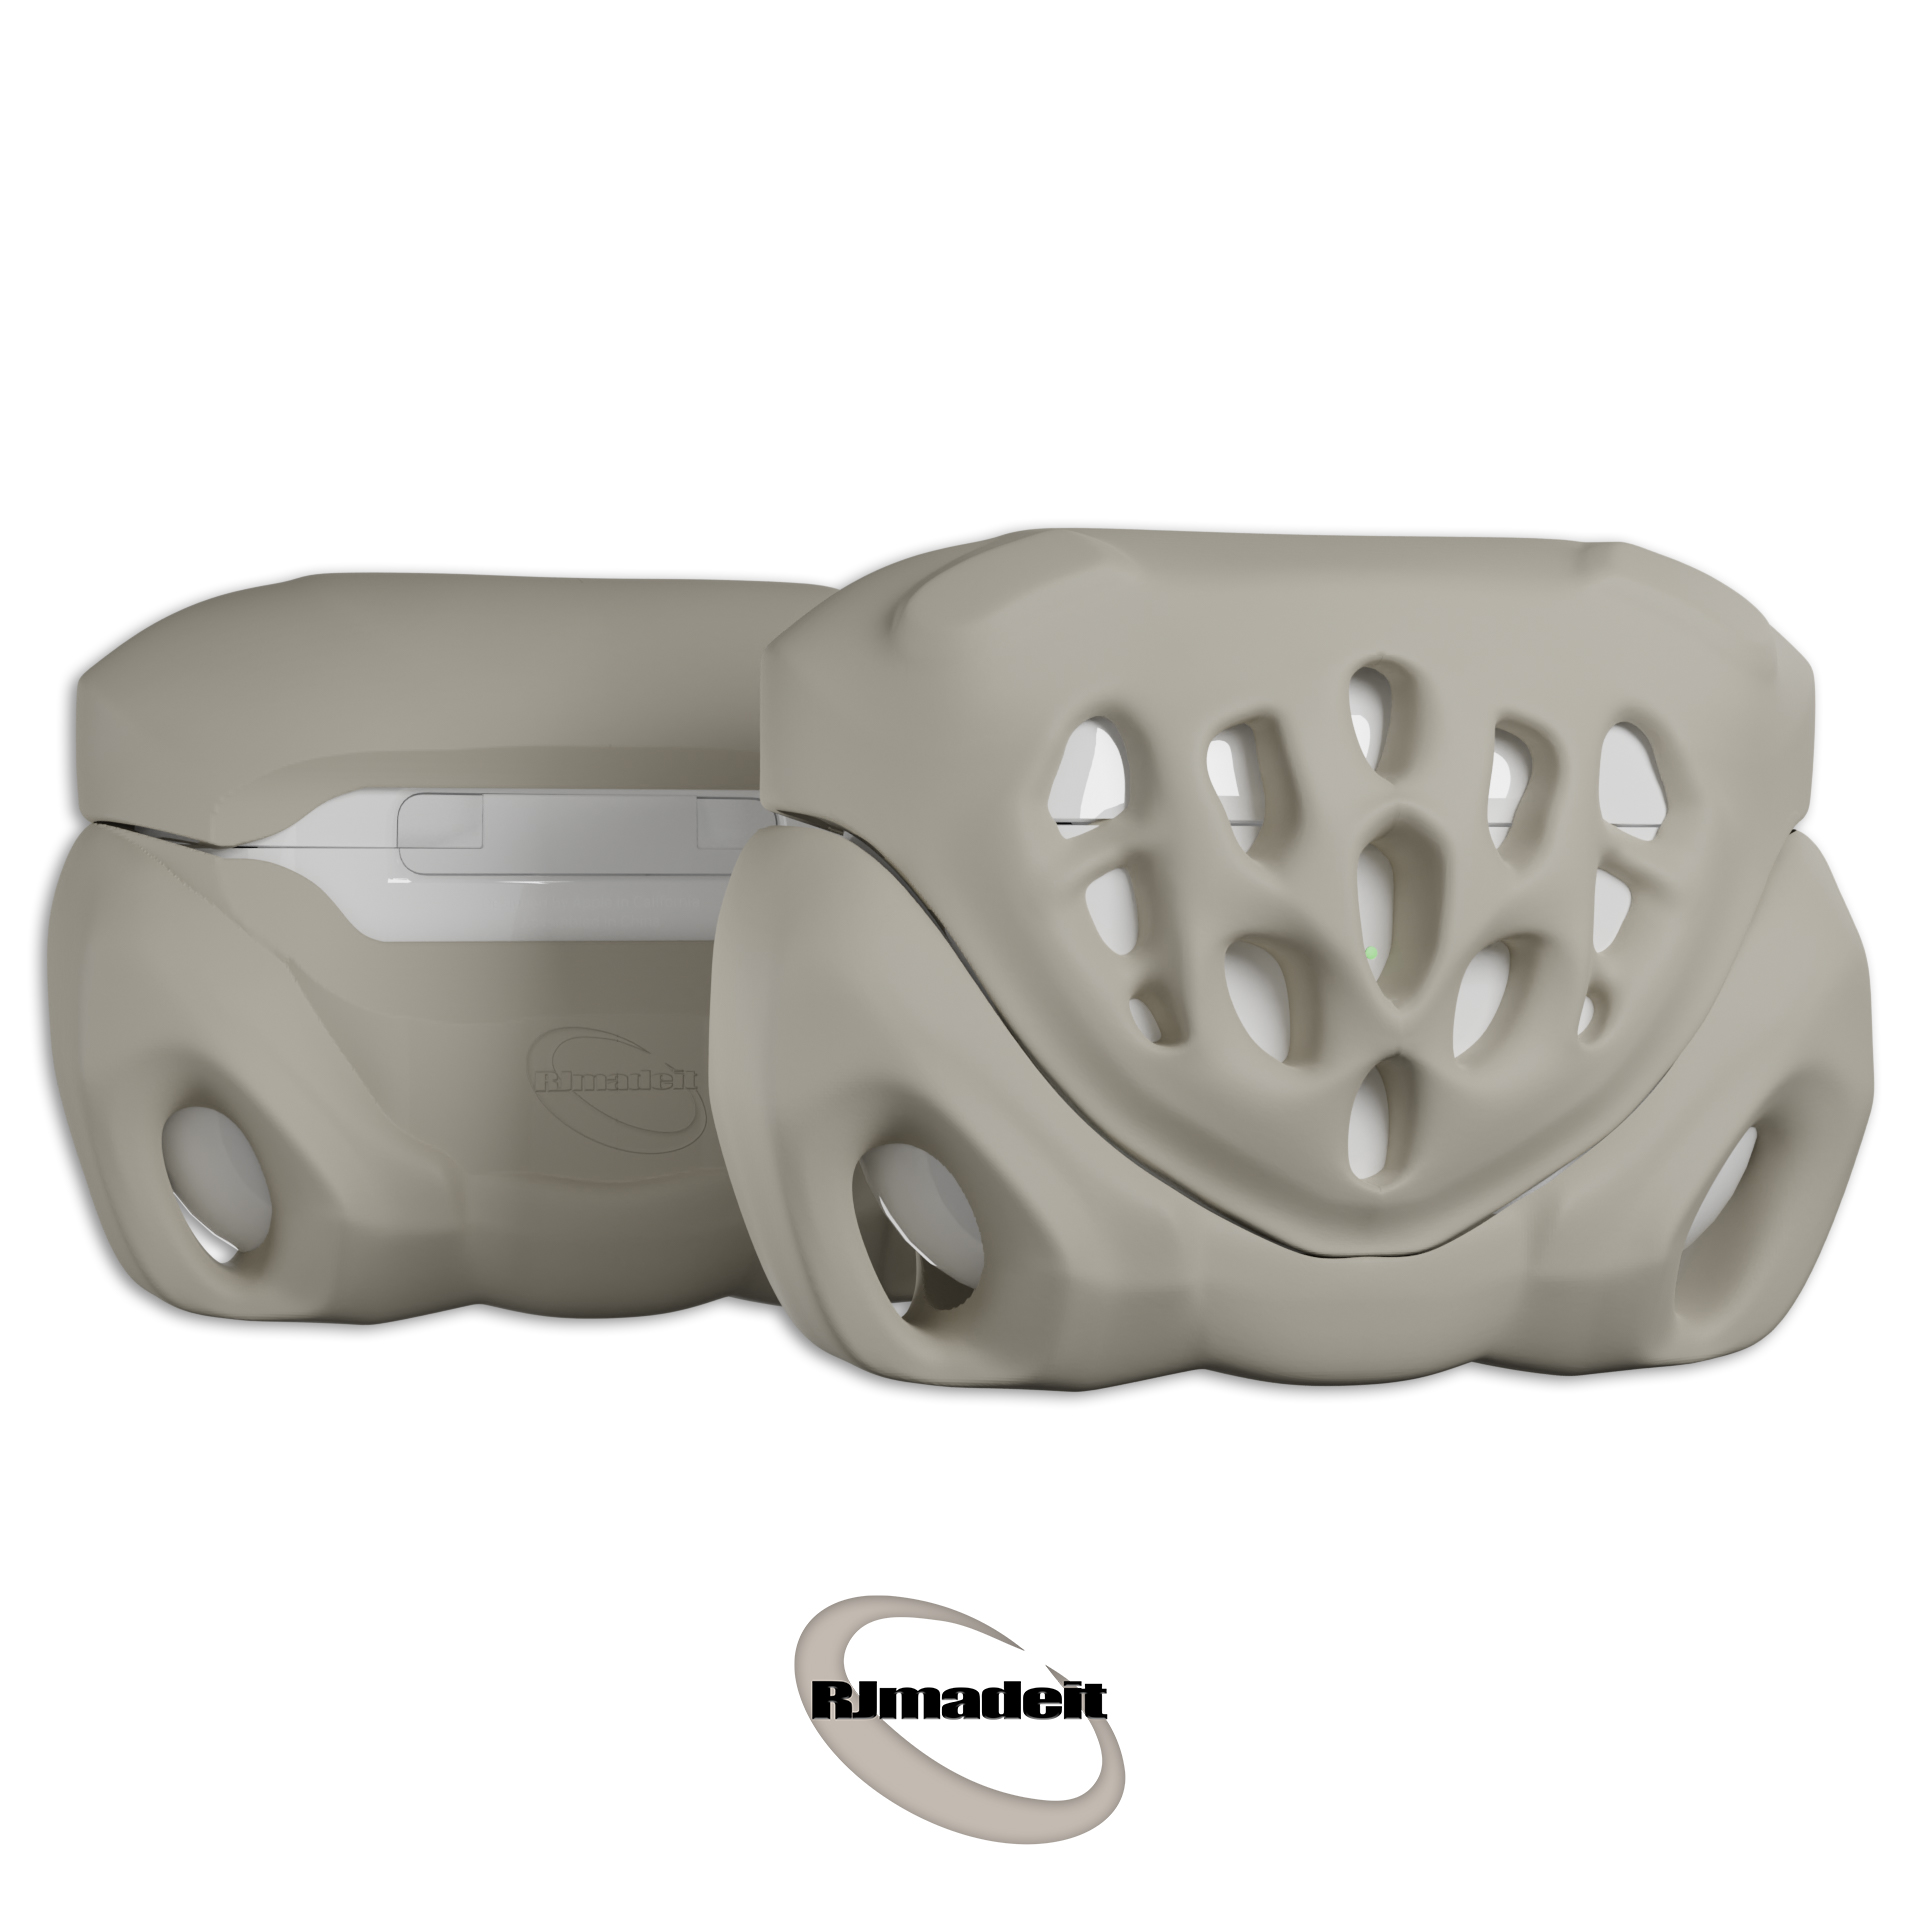 foamcase小众概念先锋airpods pro/aipods3苹果小众潮流硅胶耳机壳苹果耳机套保护套yezzy美式风格保护套